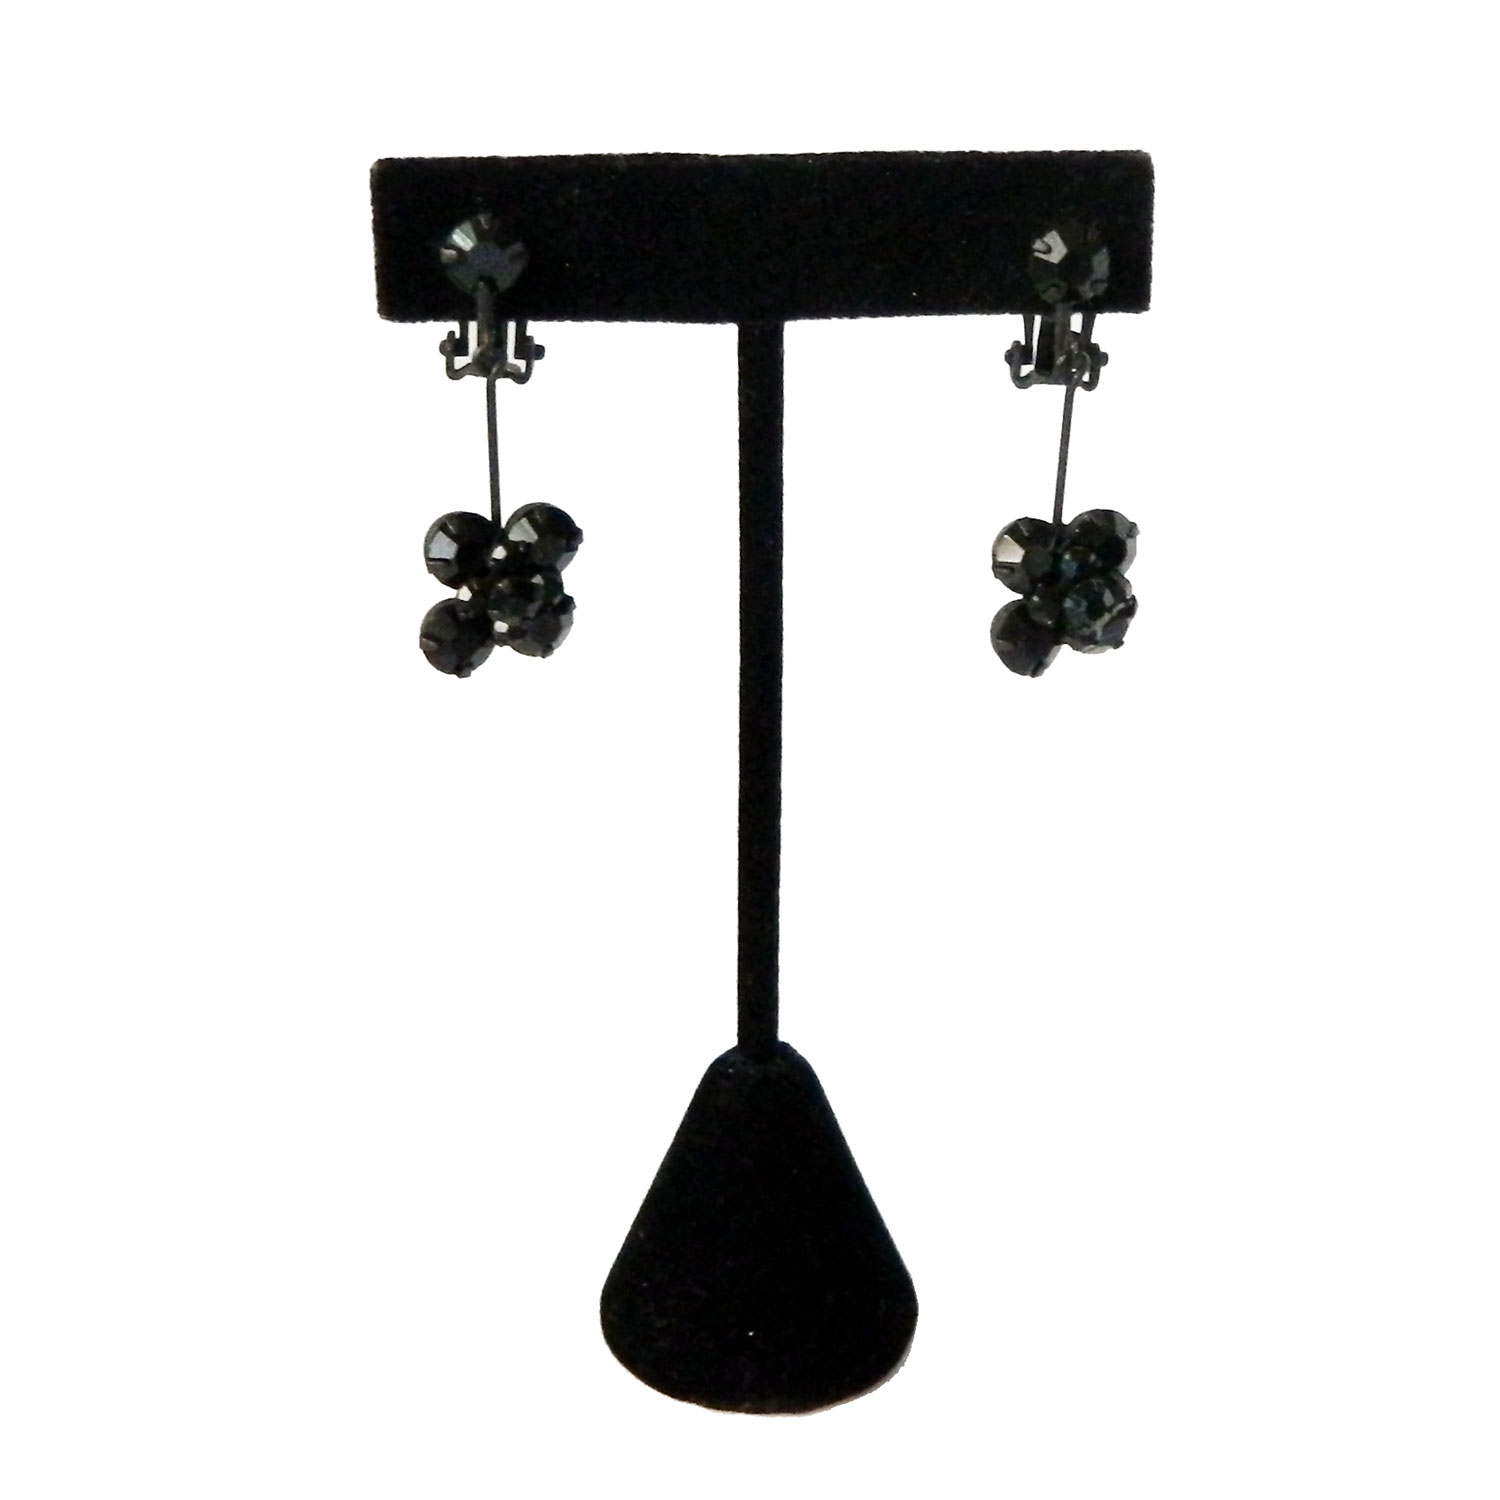 Black rhinestone drop earrings